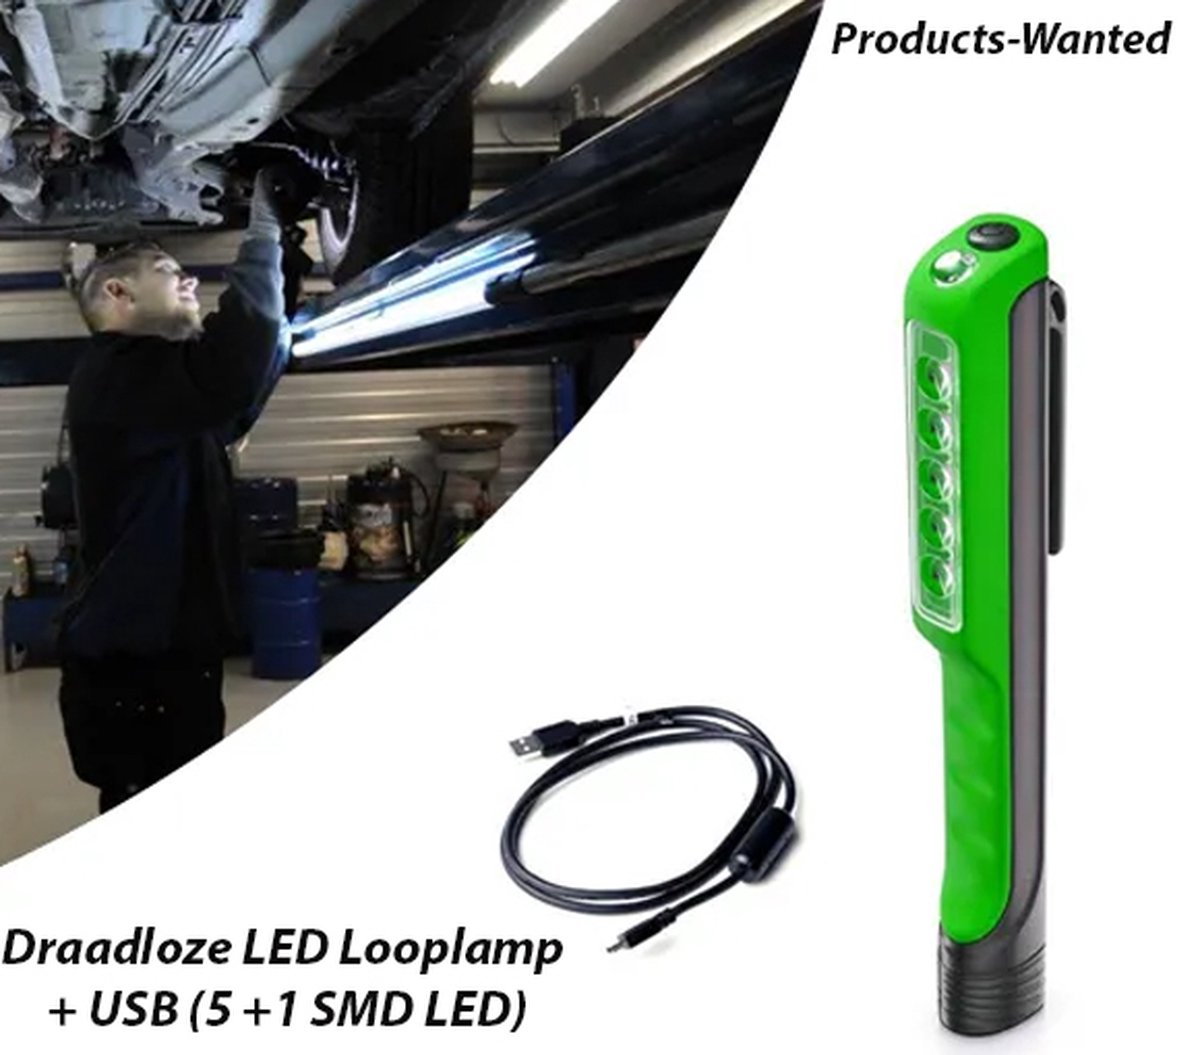 Draadloze LED Looplamp + USB (5 +1 SMD LED) | bol.com